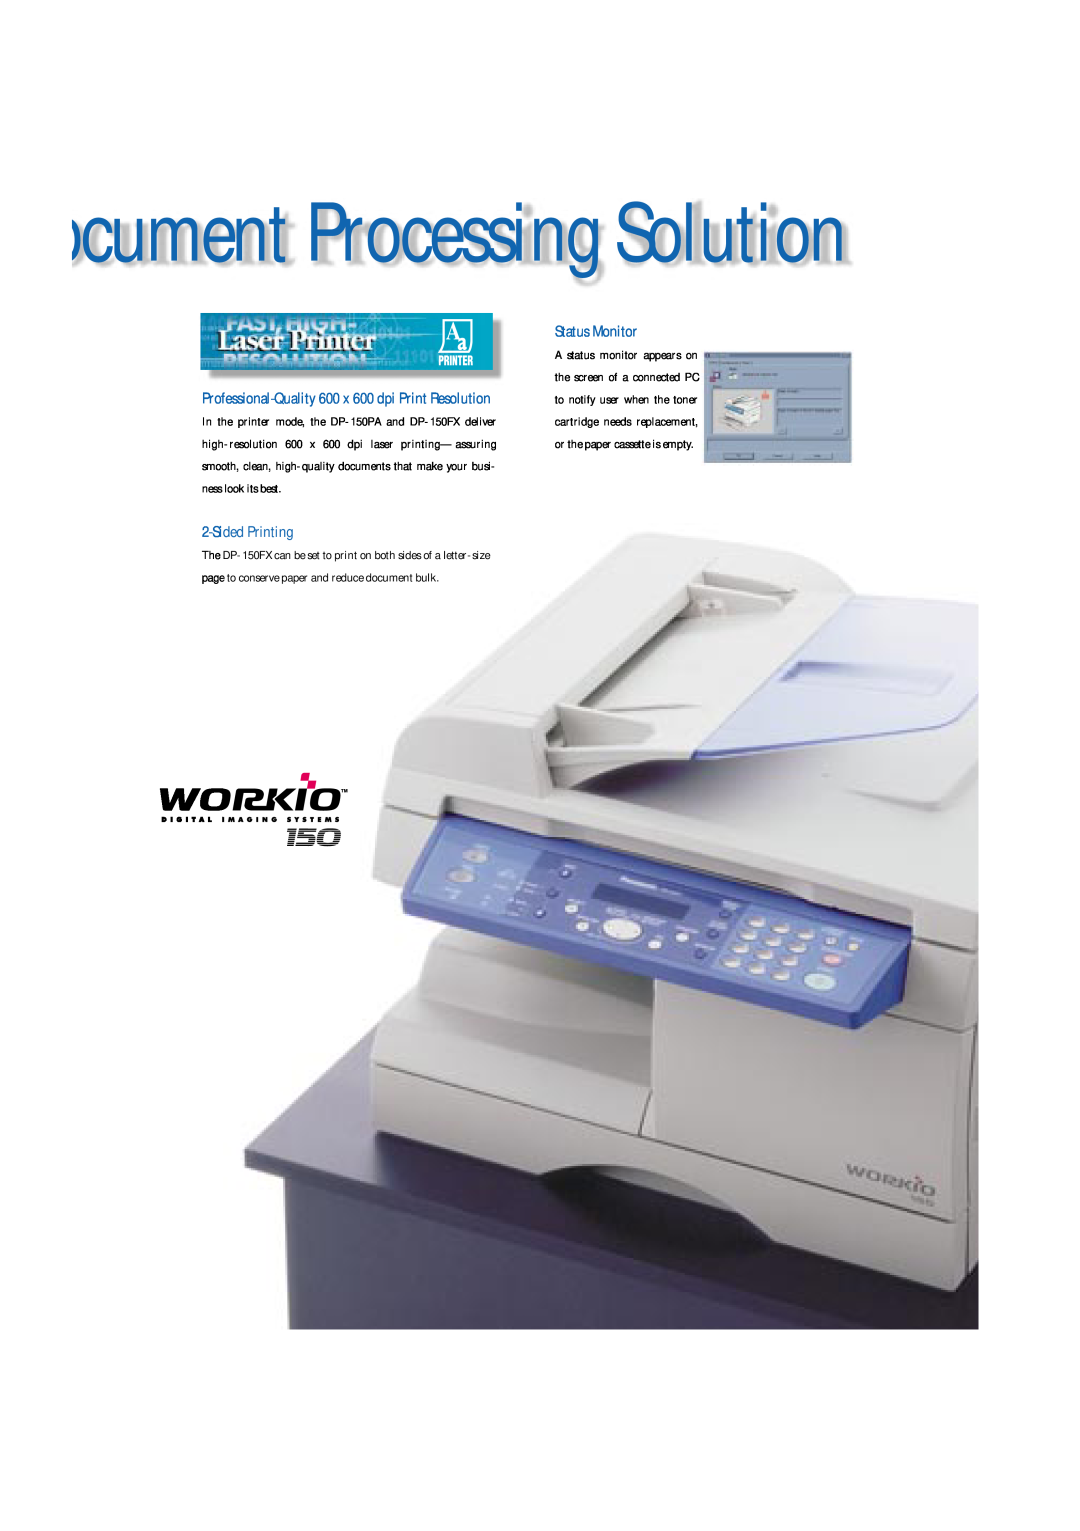 Panasonic DP-150PA, DP150, DP-150A manual Status Monitor, Sided Printing, ocument Processing Solution 